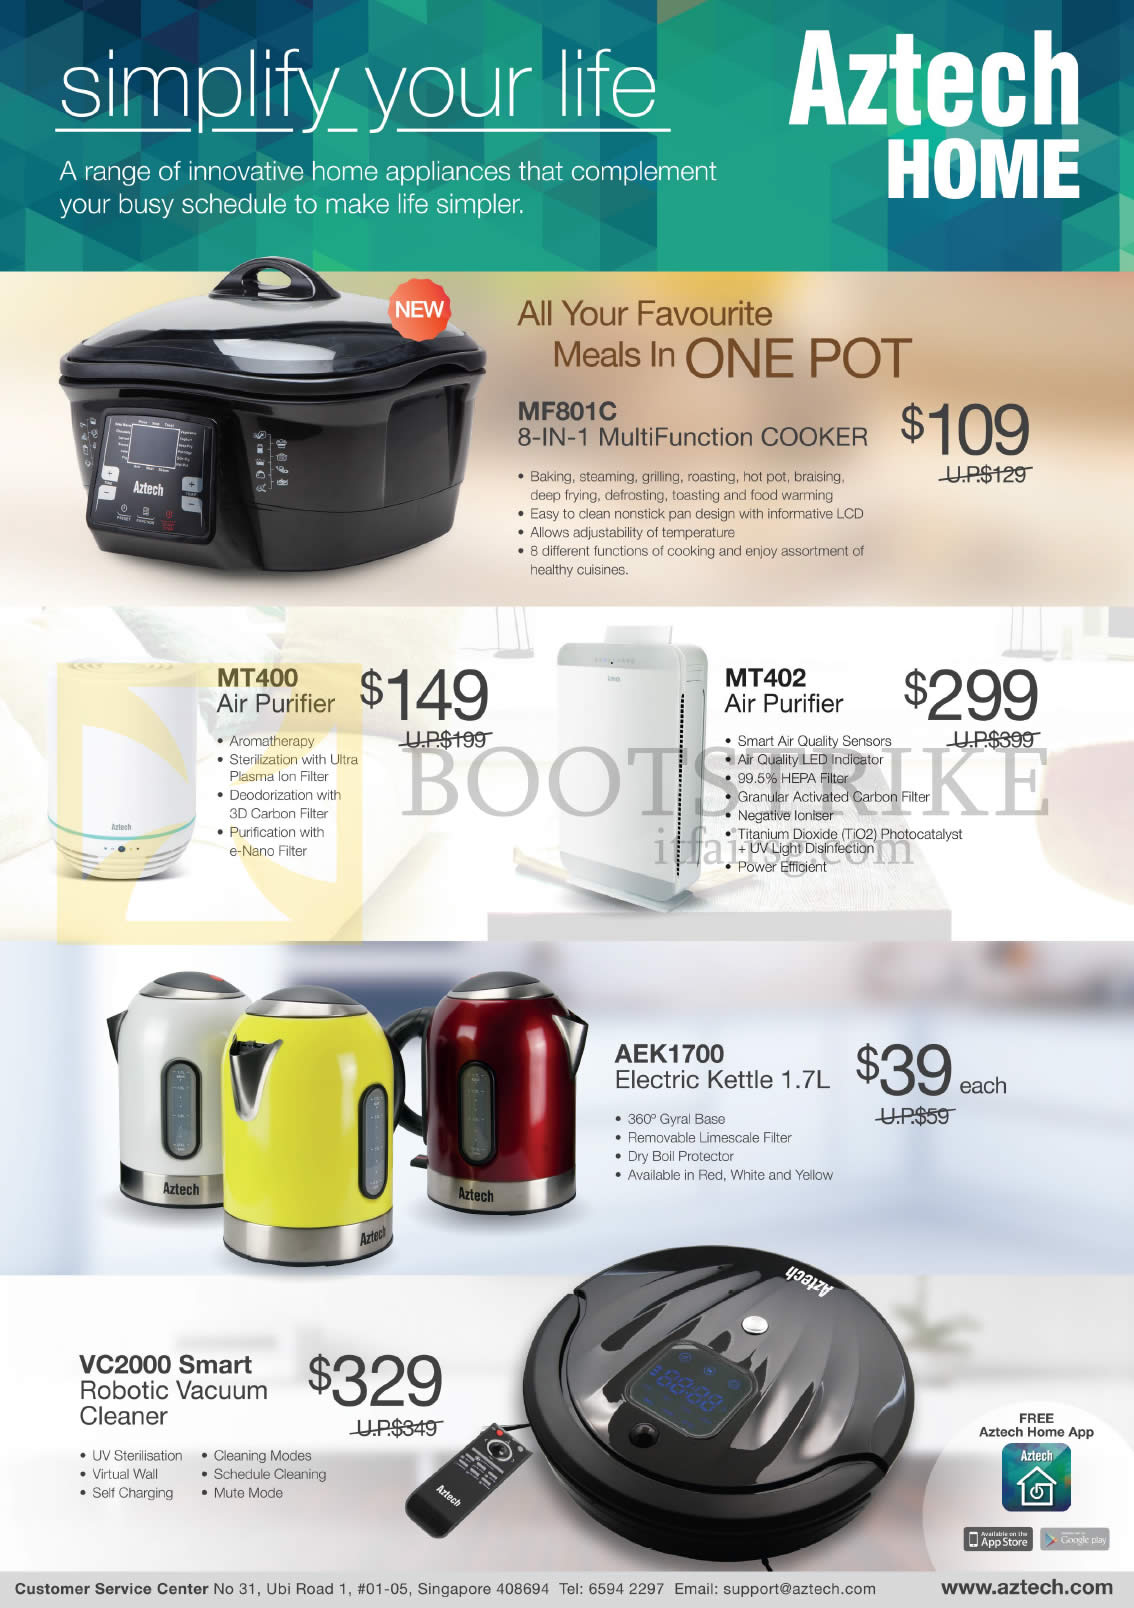 IT SHOW 2015 price list image brochure of Aztech MF801C Cooker, MT400, MT402 Air Purifier, AEK1700 Kettle, VC2000 Robotic Vacuum Cleaner